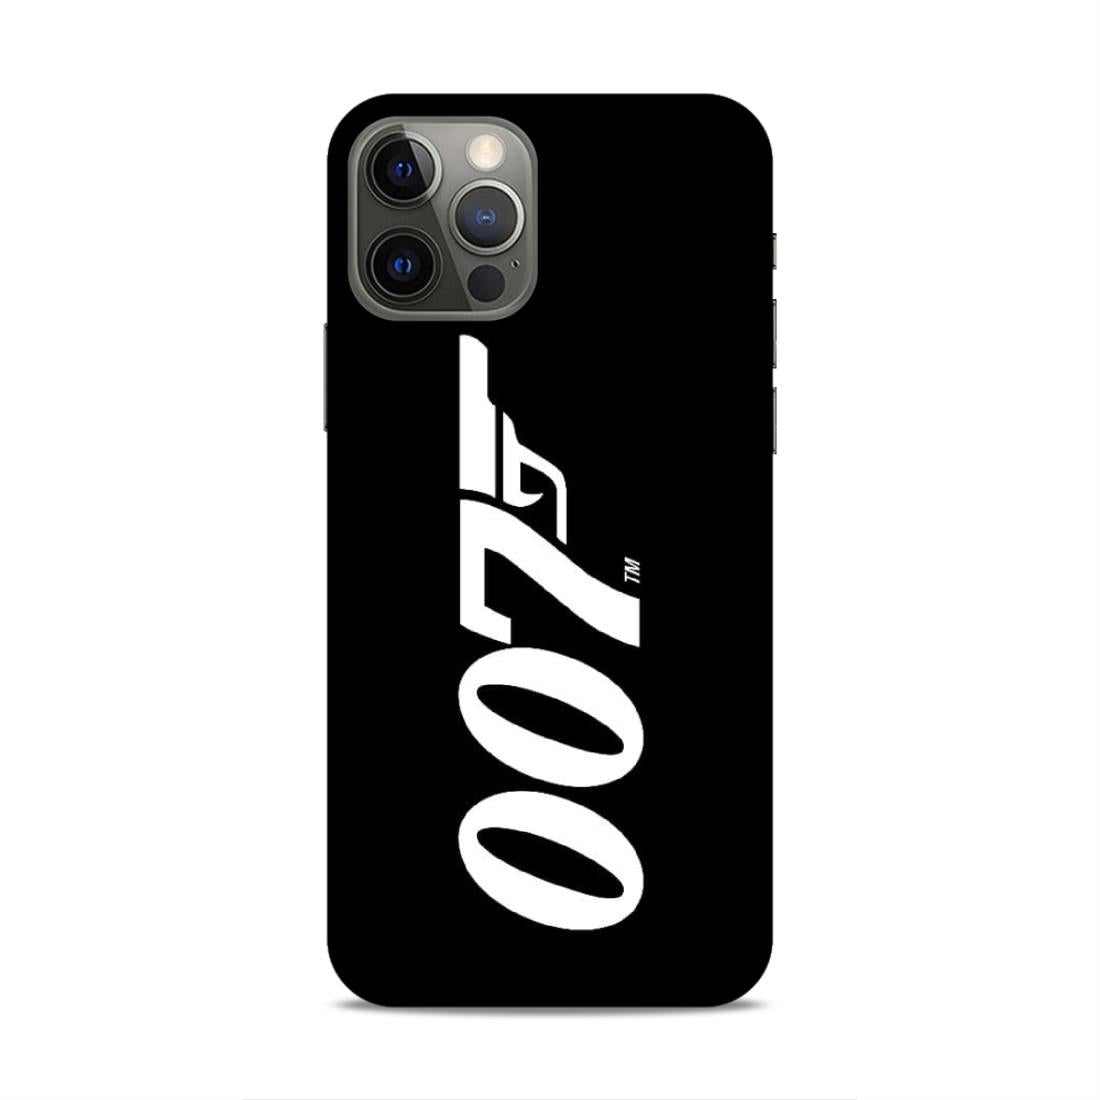 Jems Bond 007 Hard Back Case For Apple iPhone 12 / 12 Pro